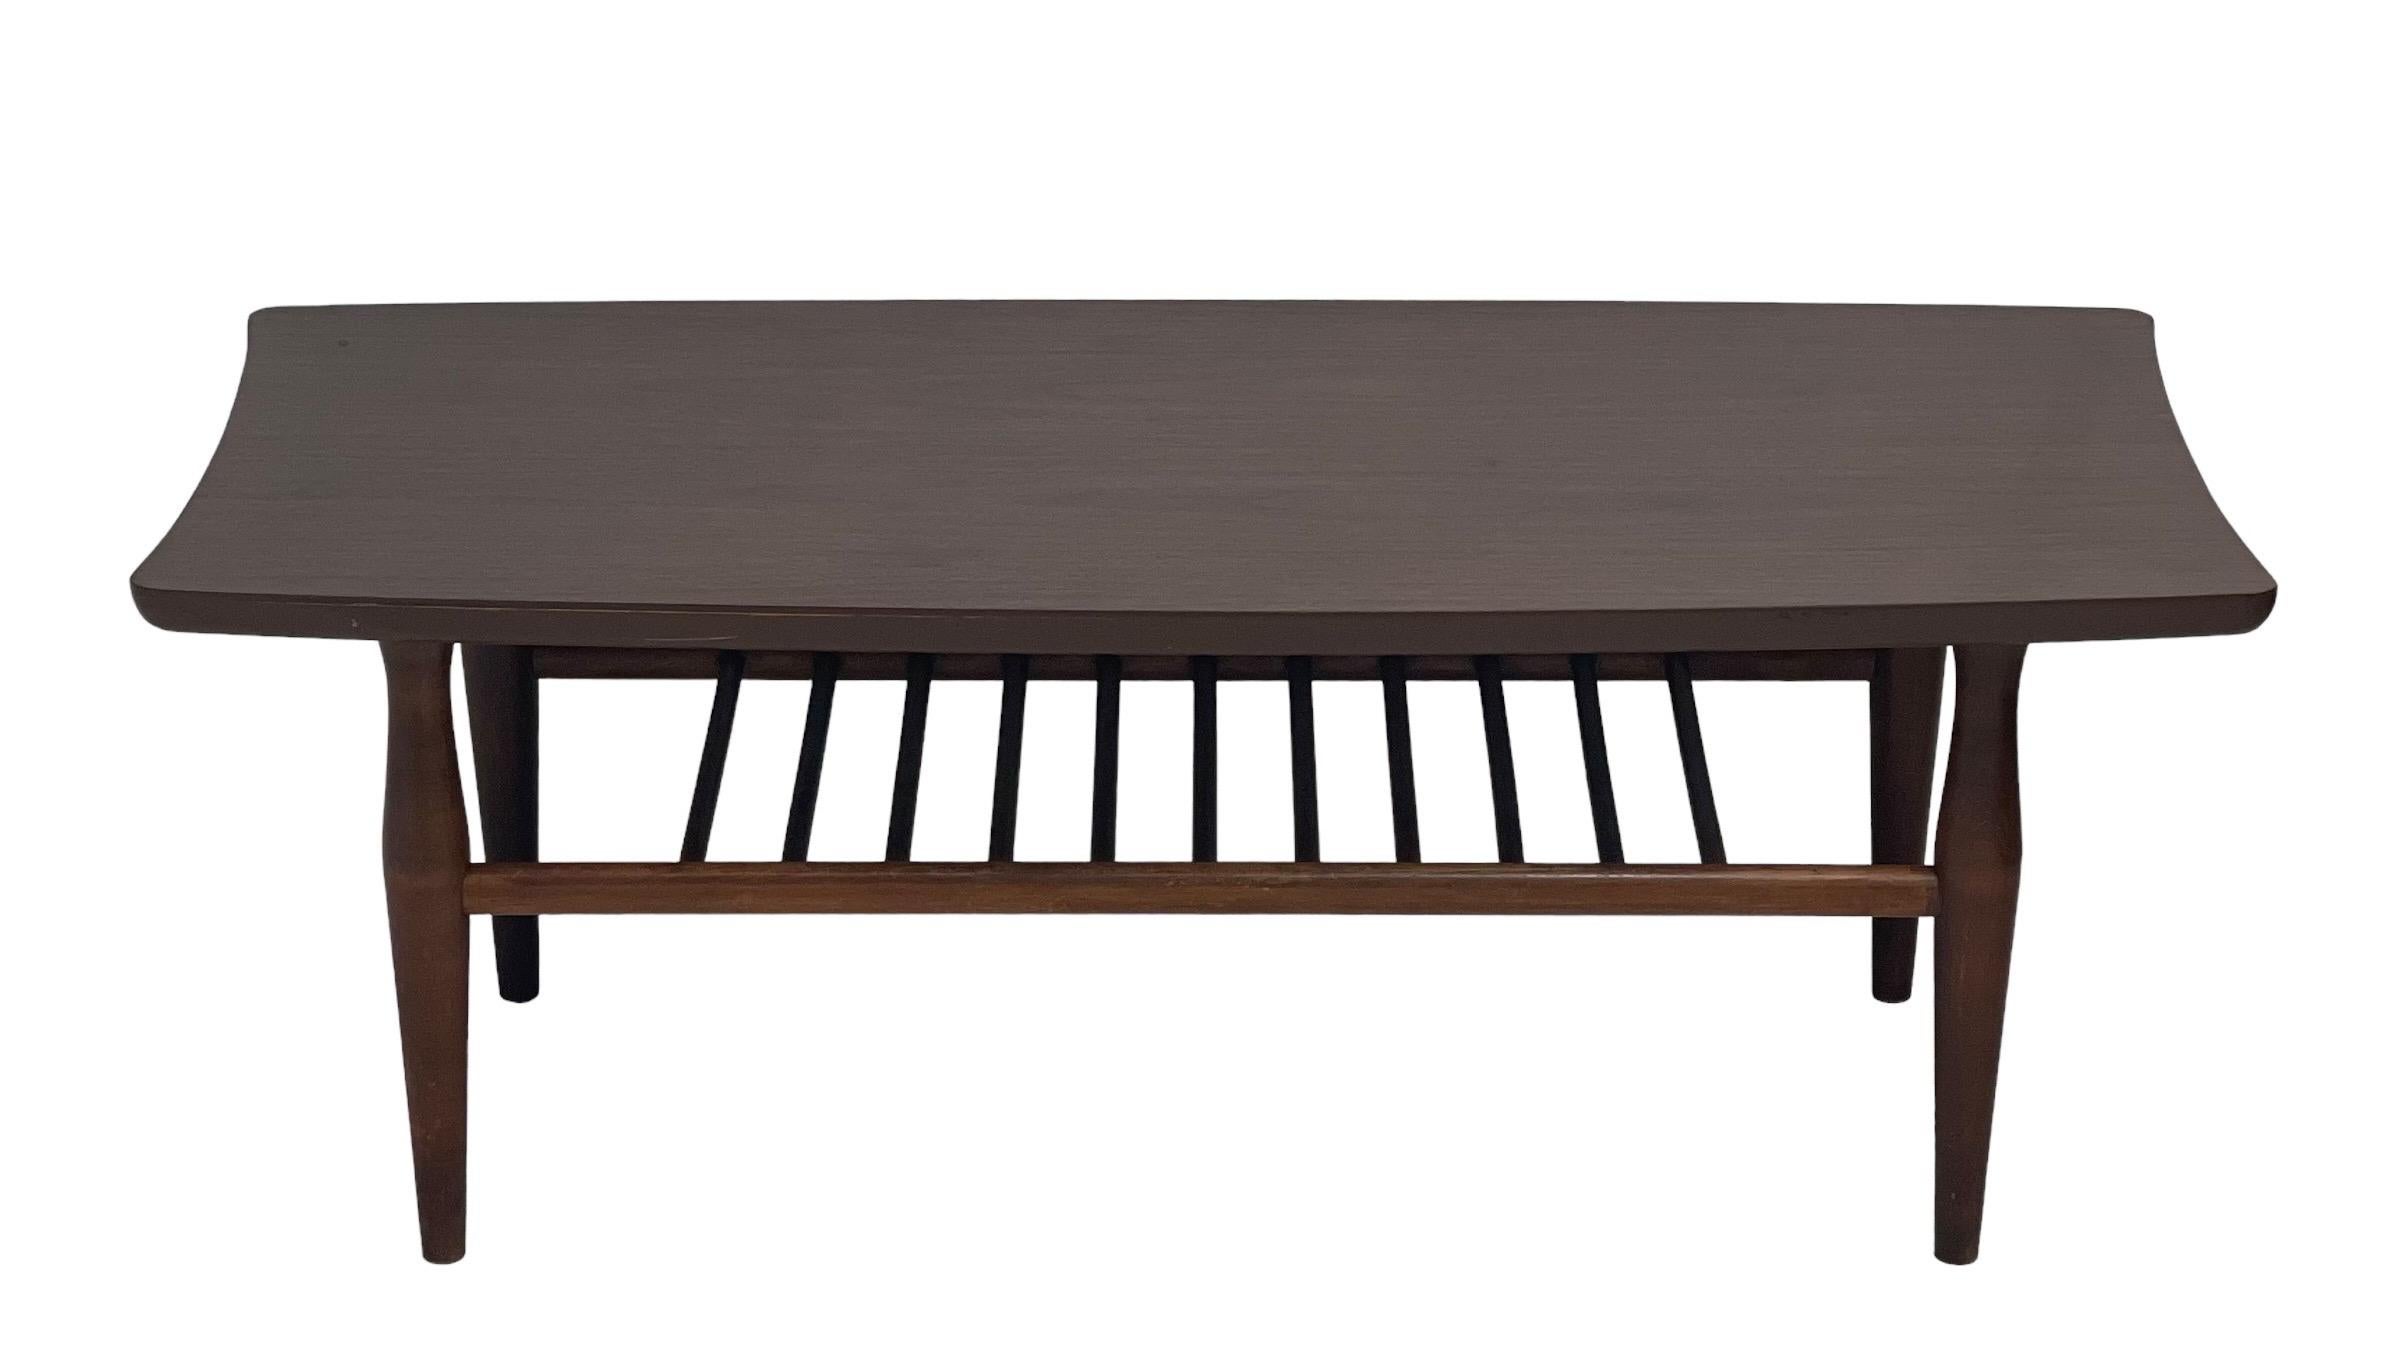 Vintage Mid-Century Modern walnut coffee table With shelf.

Dimensions. 40W 18D 15H.